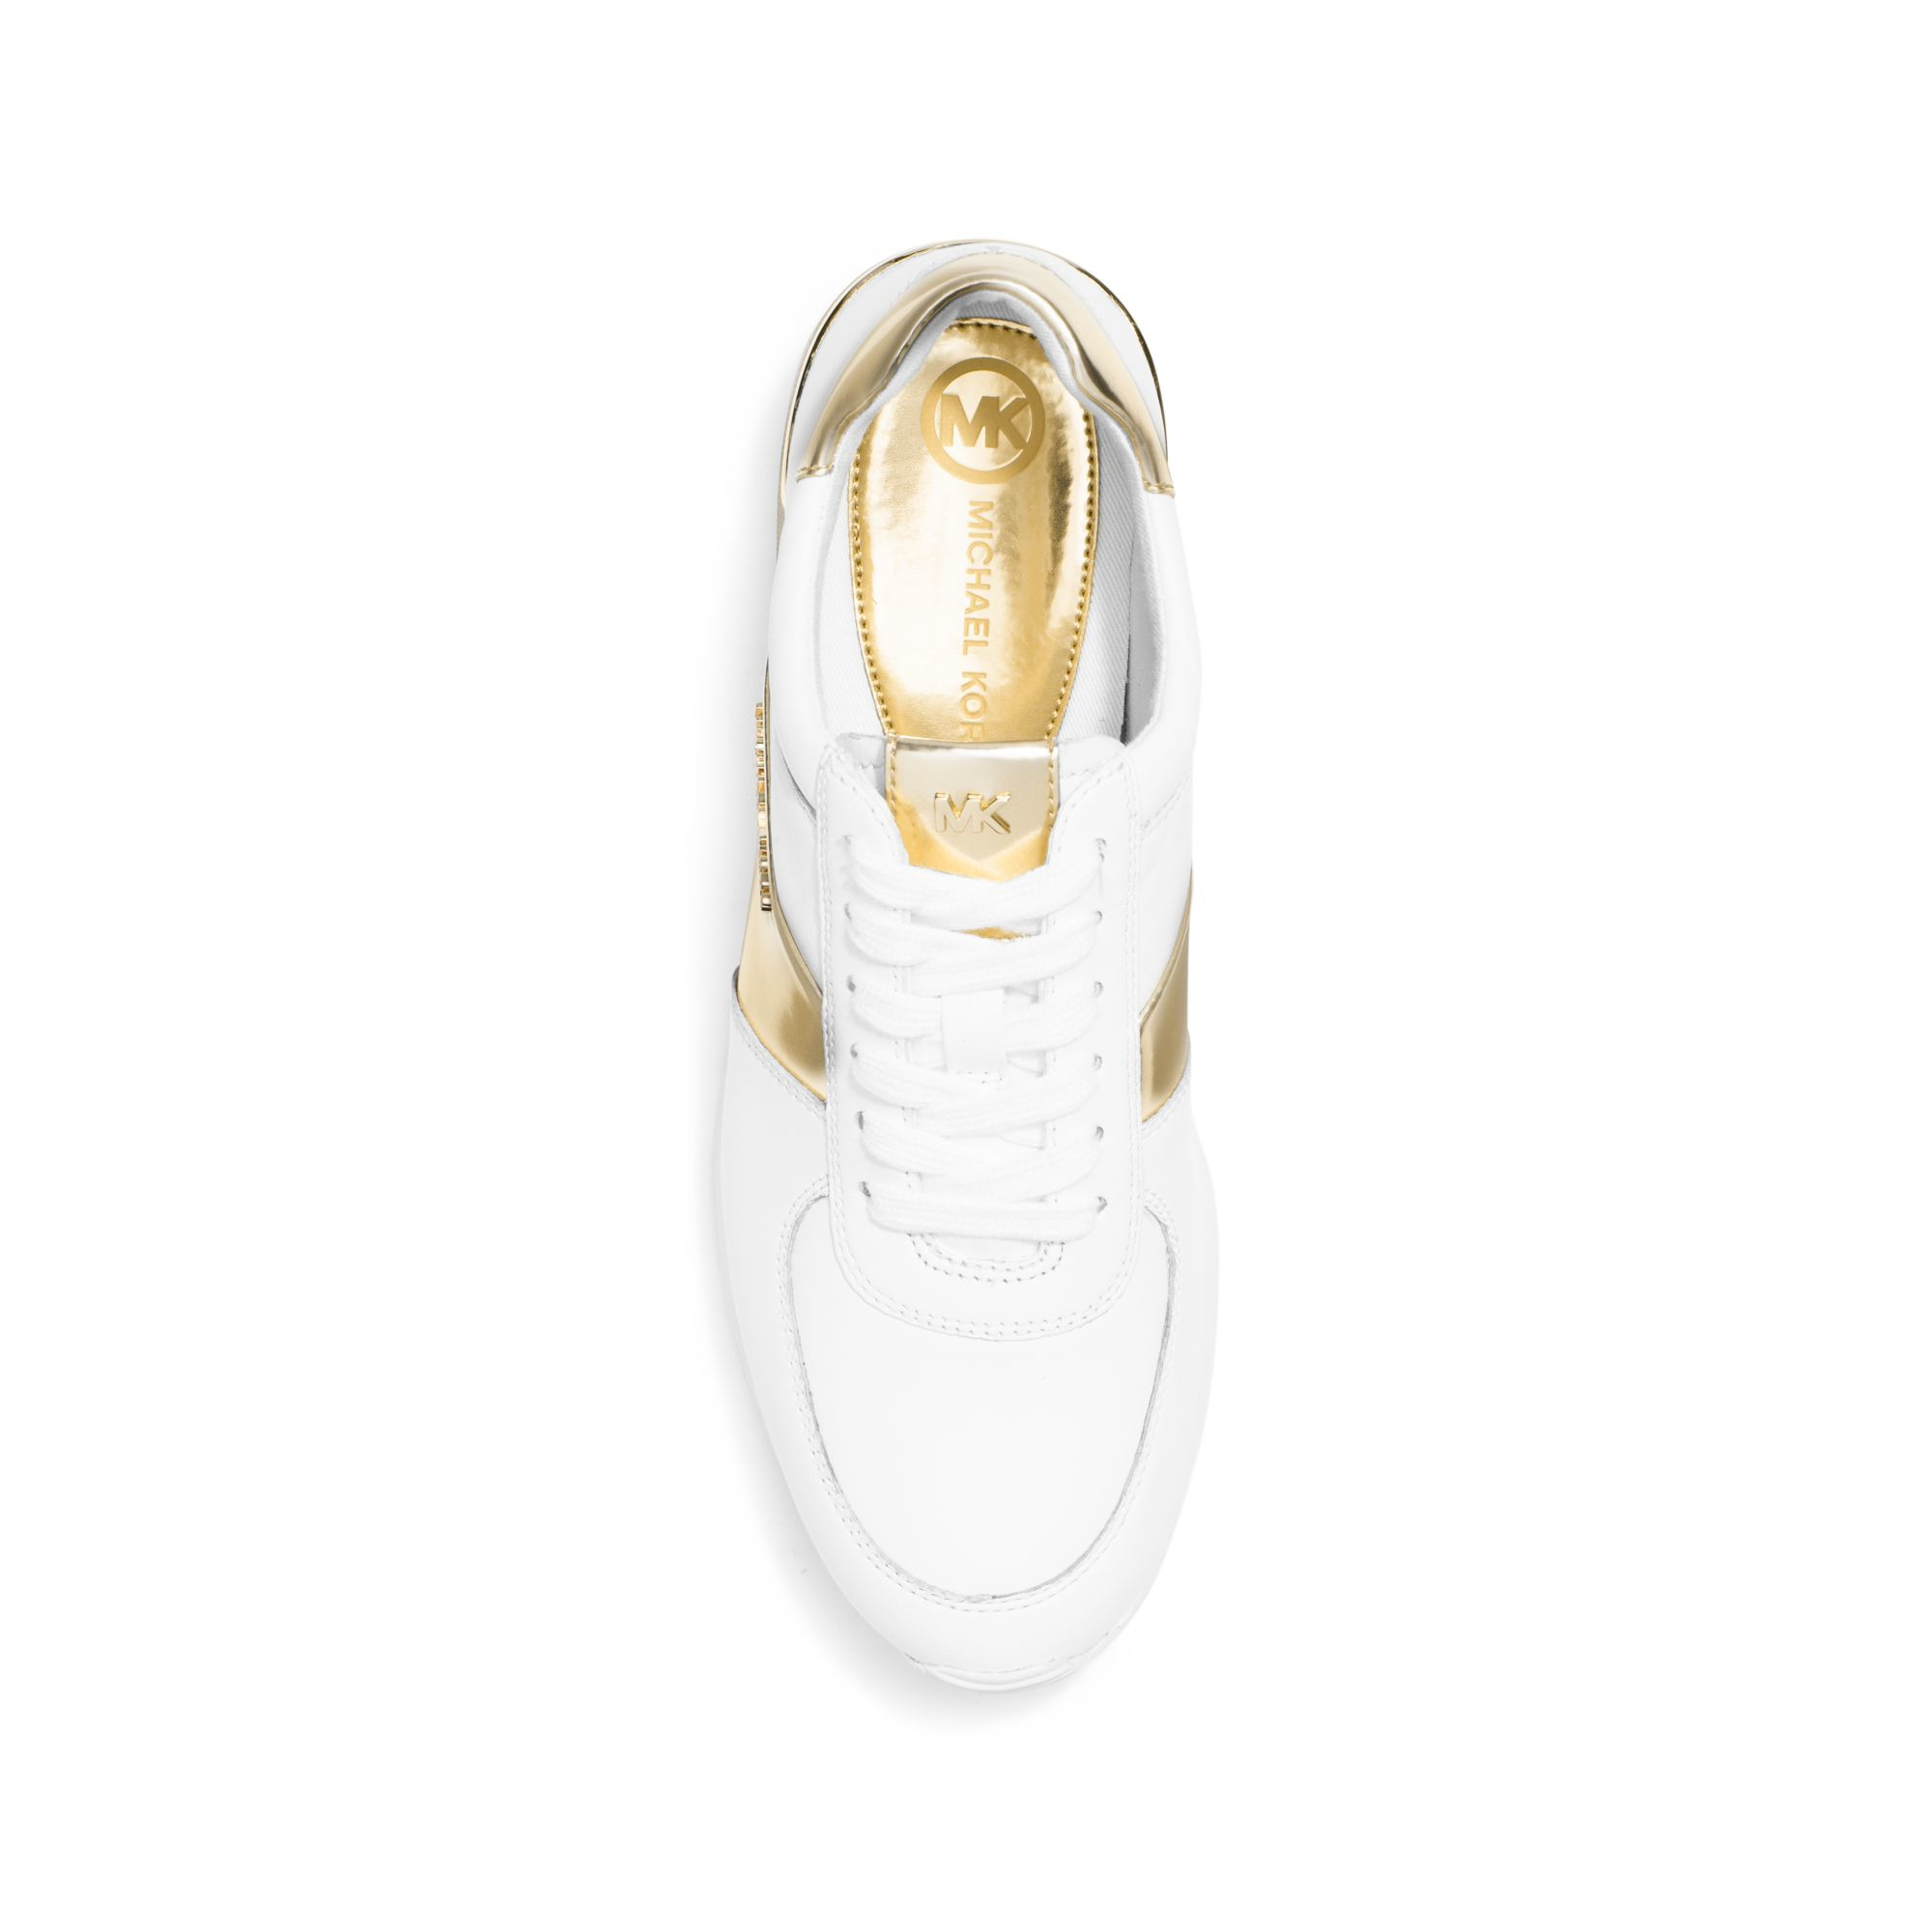 Michael Kors Allie Metallic-trim Leather Sneaker in White/Pale Gold (White)  - Lyst